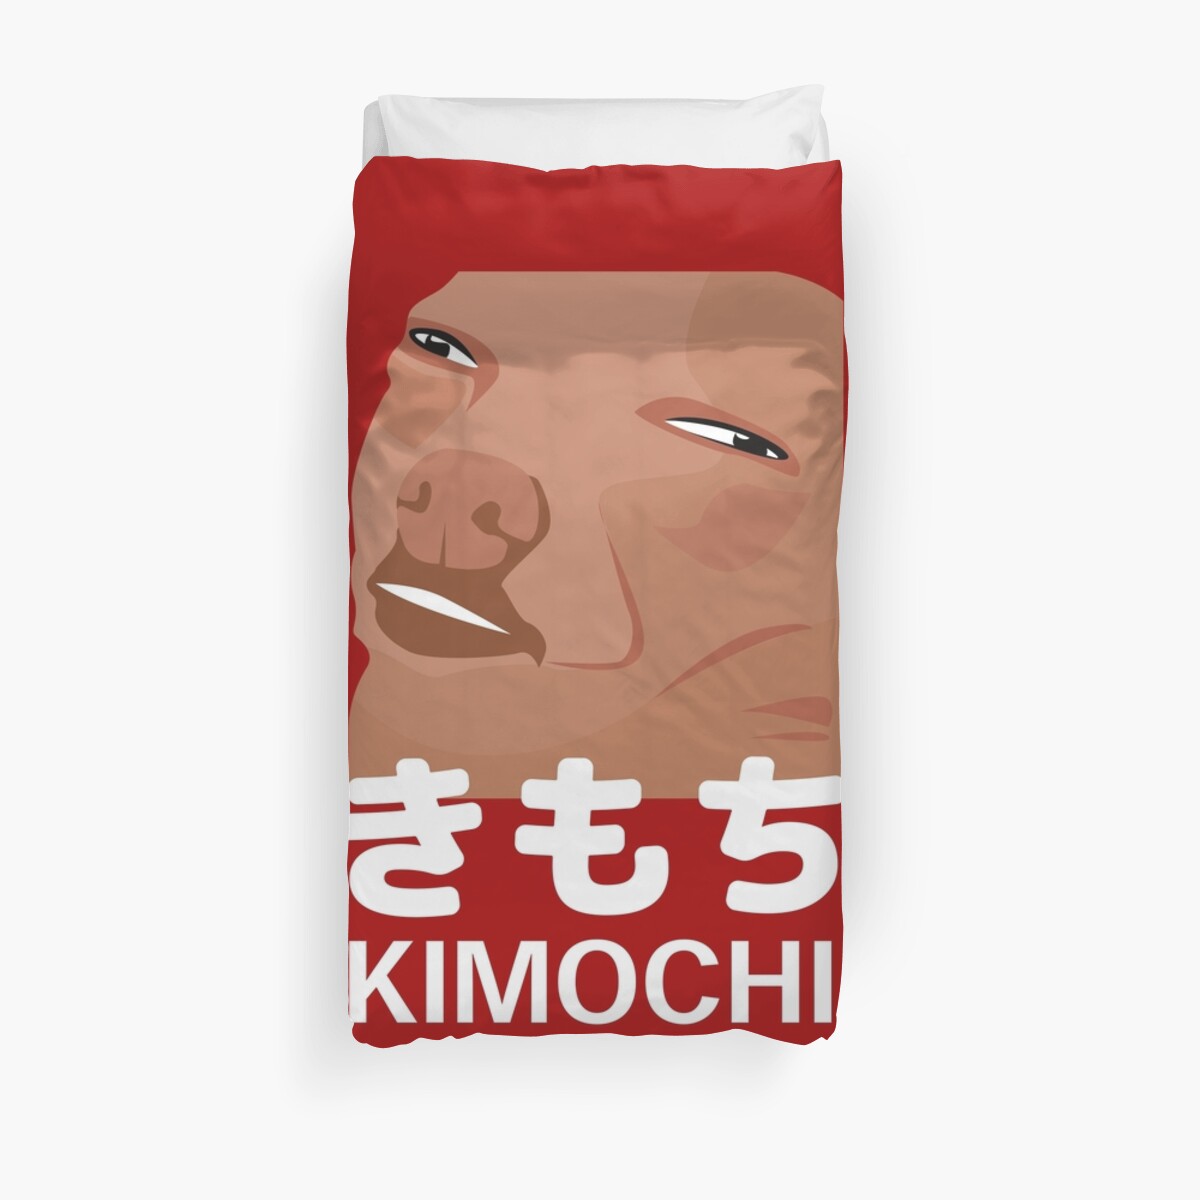 Kimochi Japanese Meme Anime Tshirt For Otaku Duvet Covers By Lukas